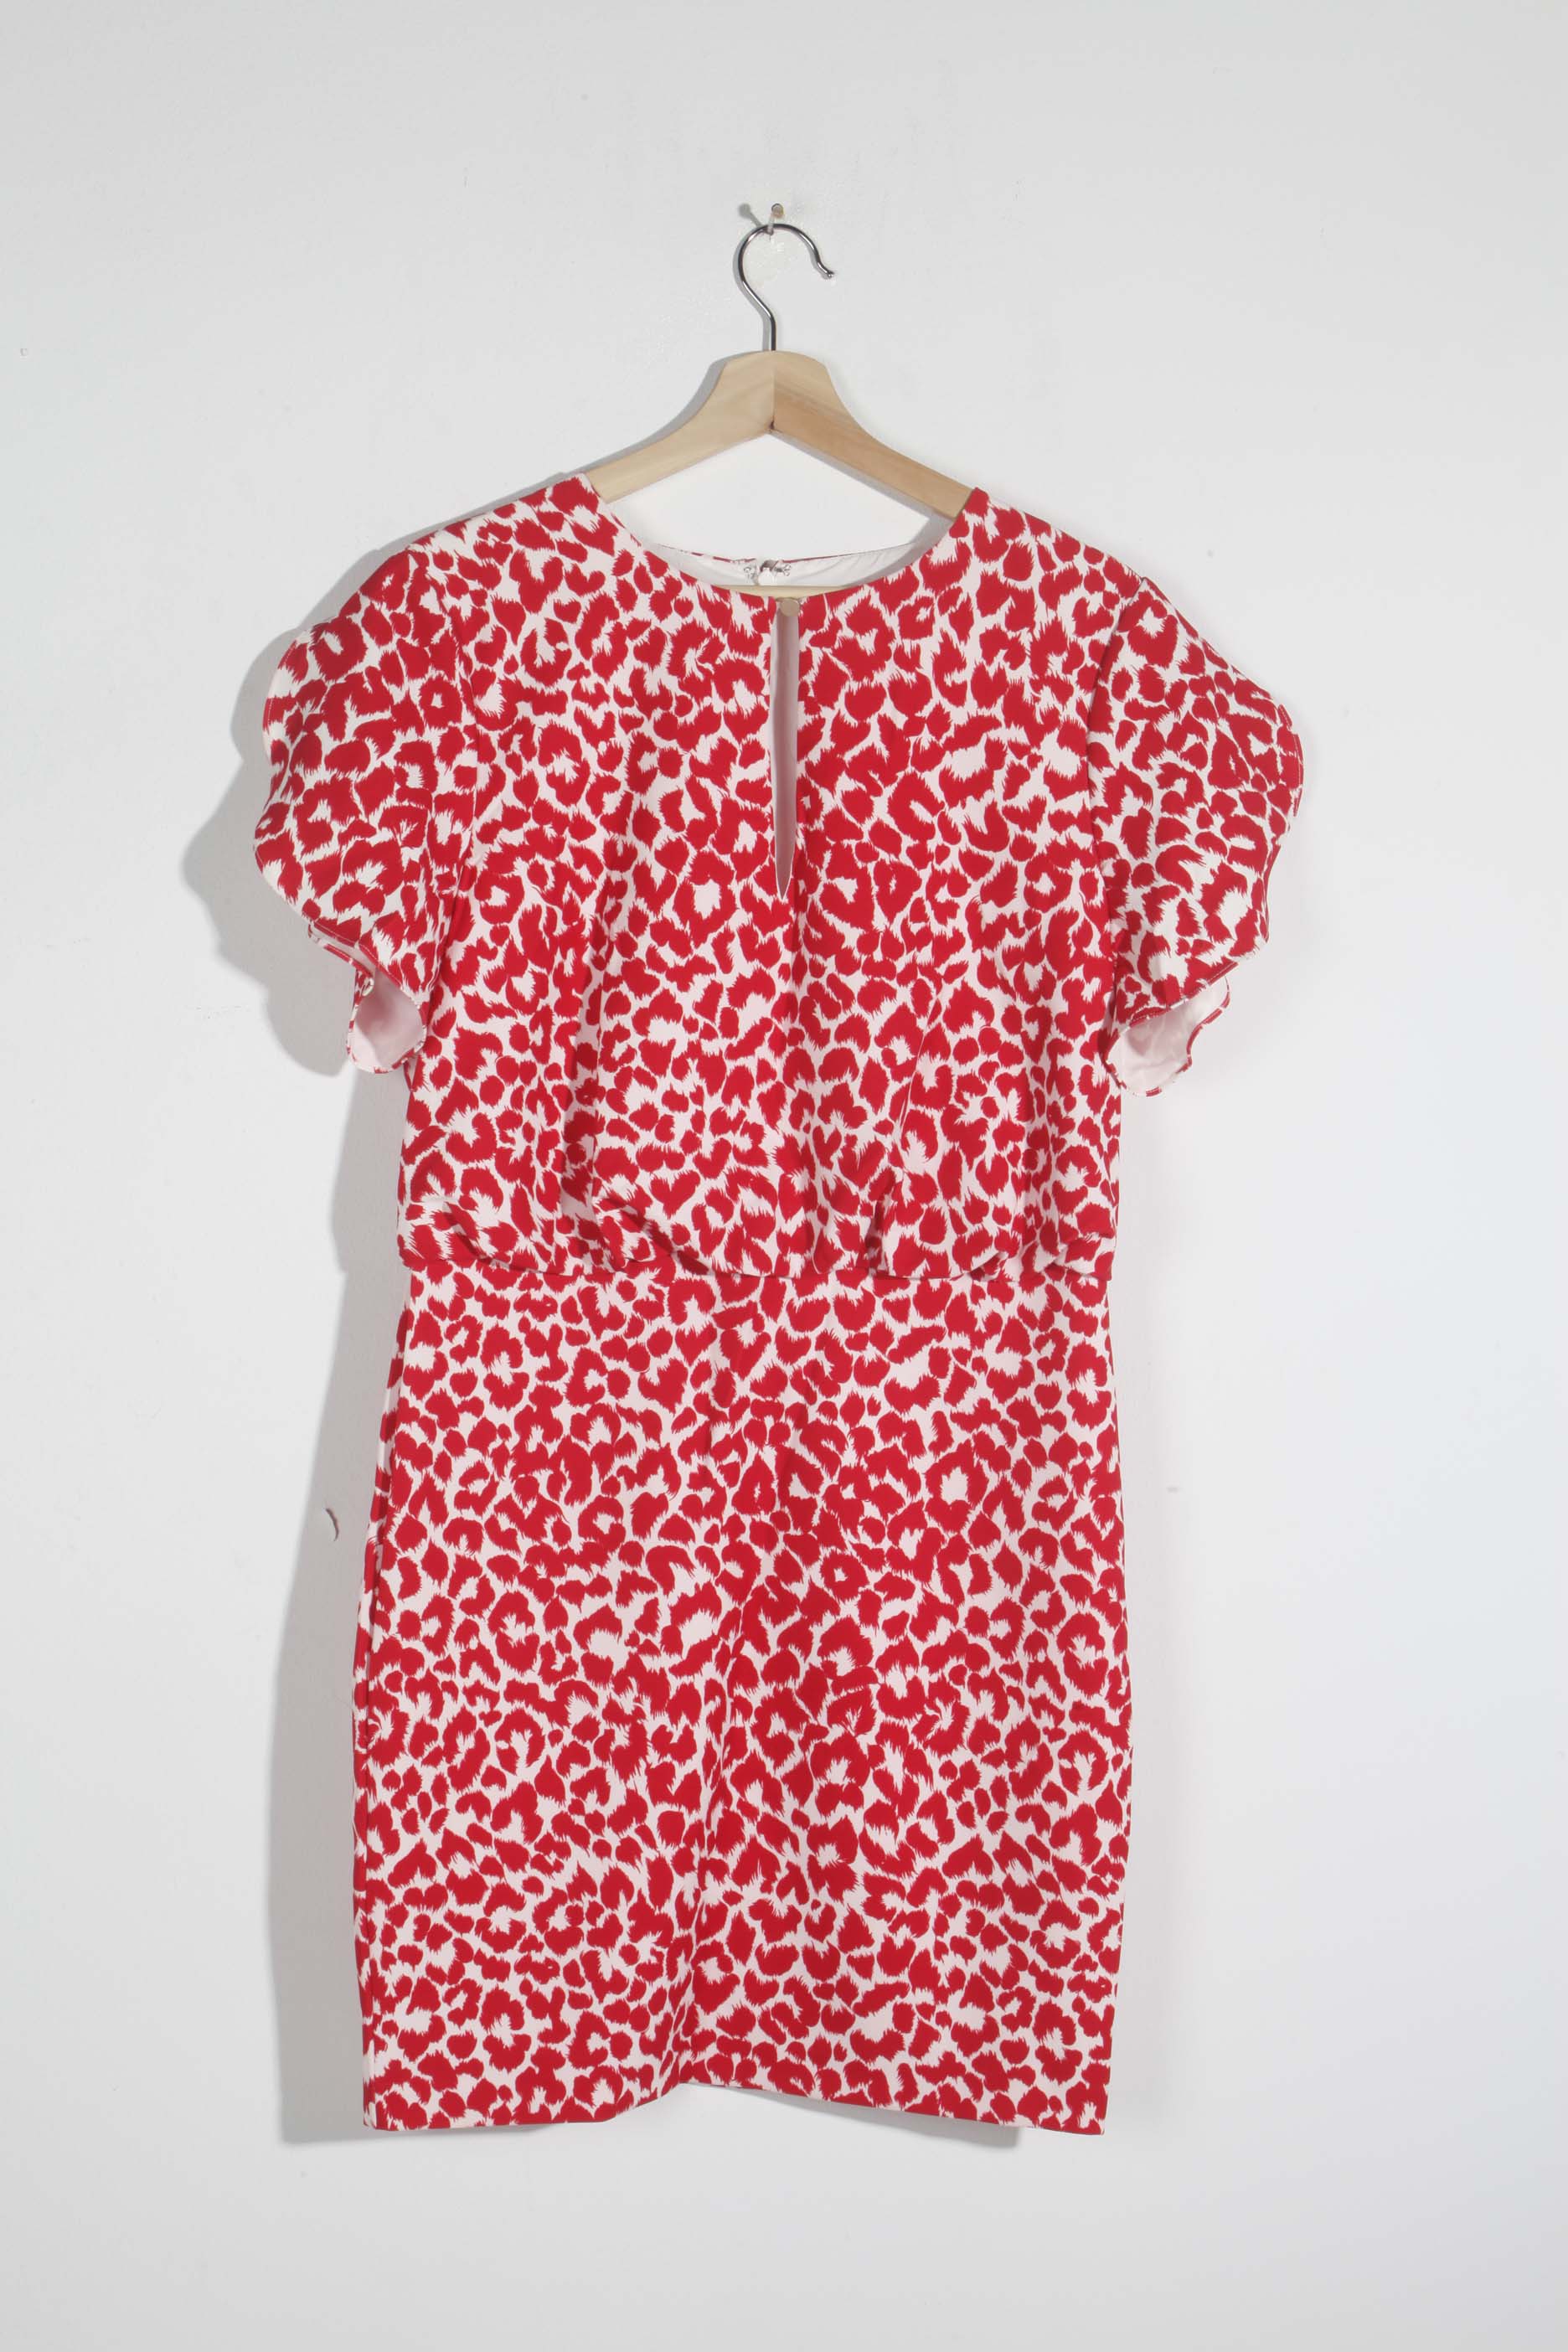 Red Leopard Print Dress (Eu40)